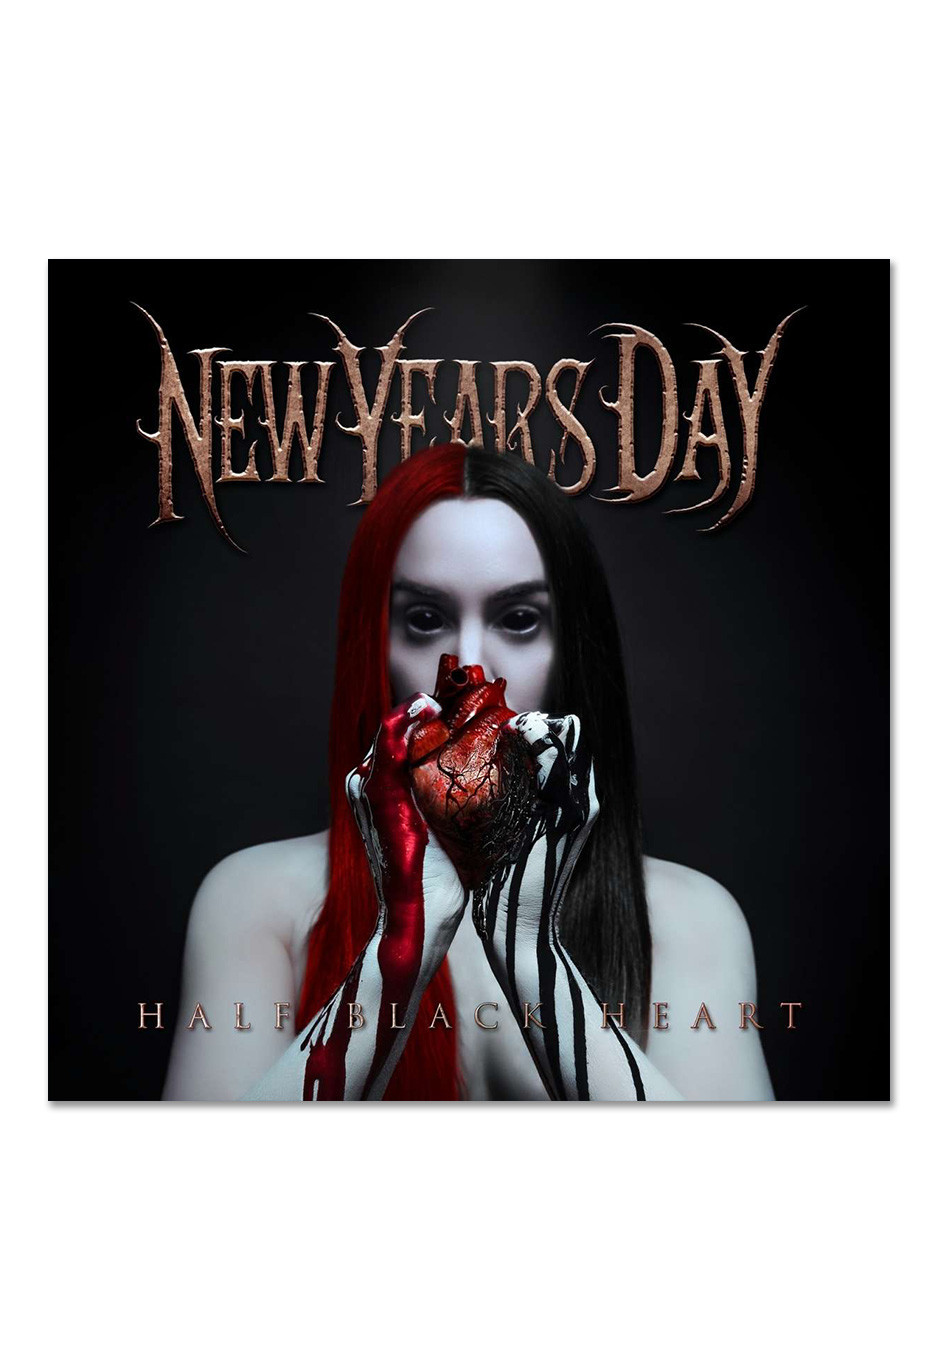 New Years Day - Half Black Heart Ltd. Deep Blood Red - Colored Vinyl